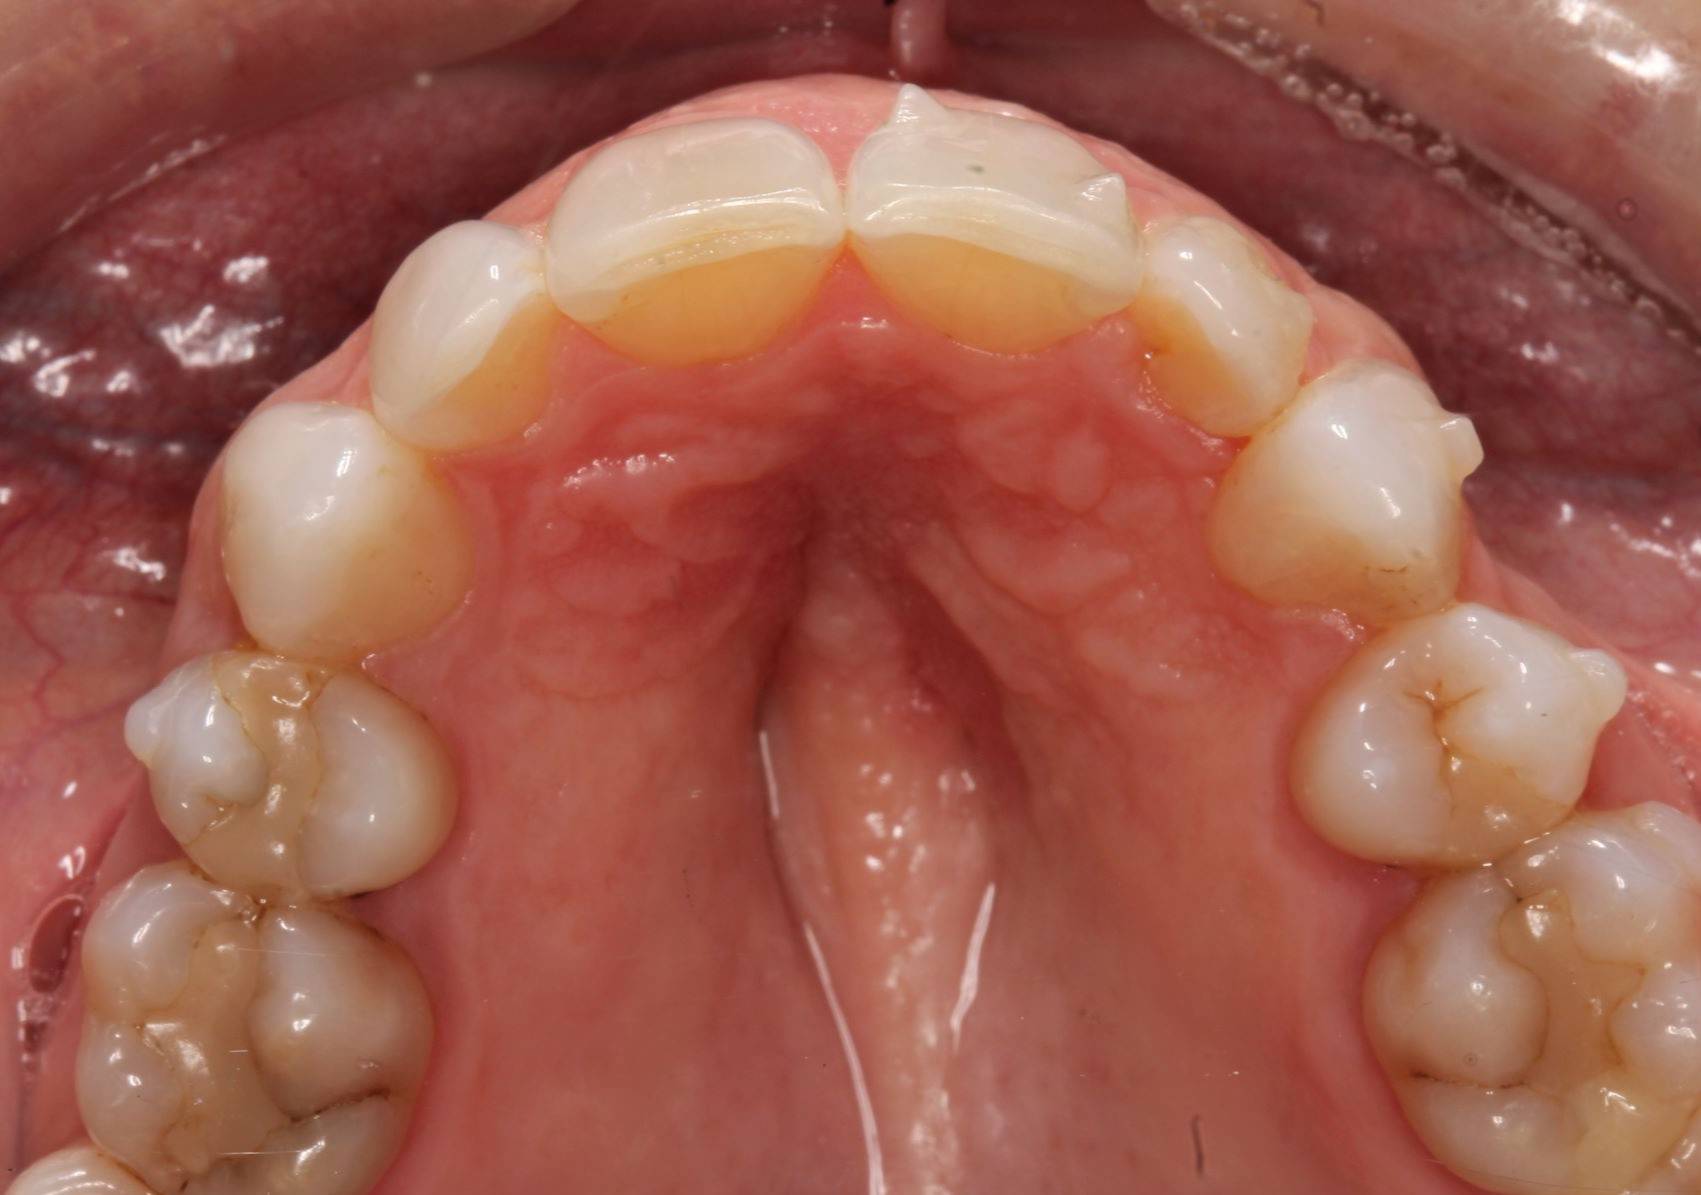 Pre-operative maxillary occlusal view 